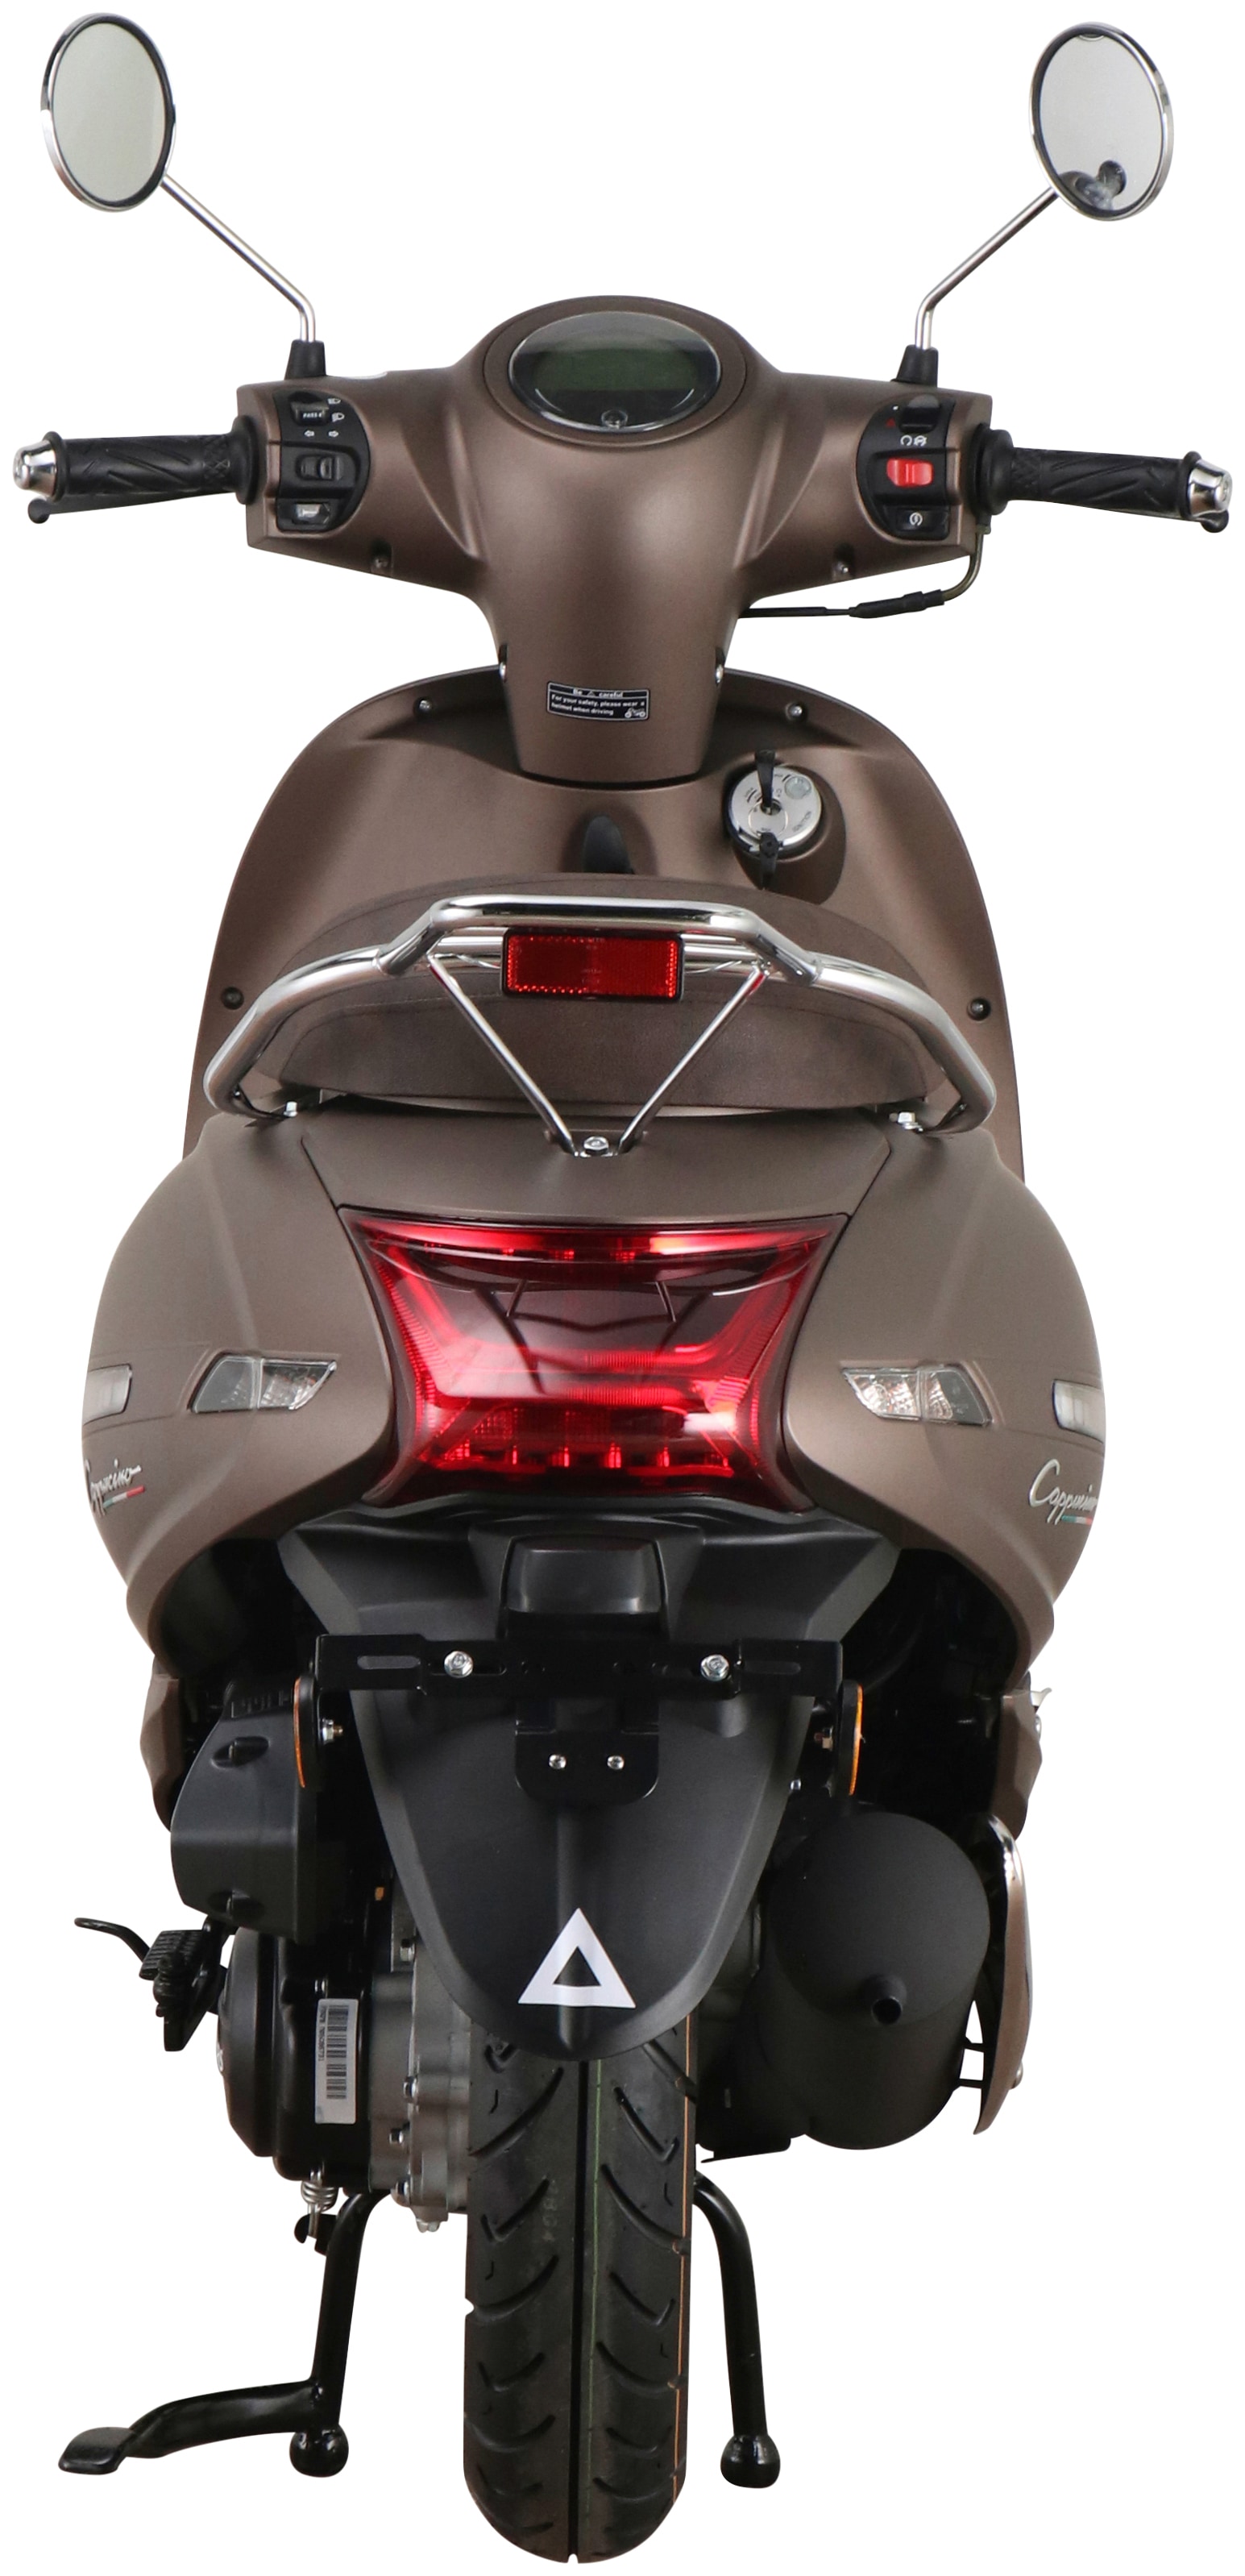 Alpha Motors Motorroller »Cappucino«, 50 cm³, 45 km/h, Euro 5, 2,99 PS